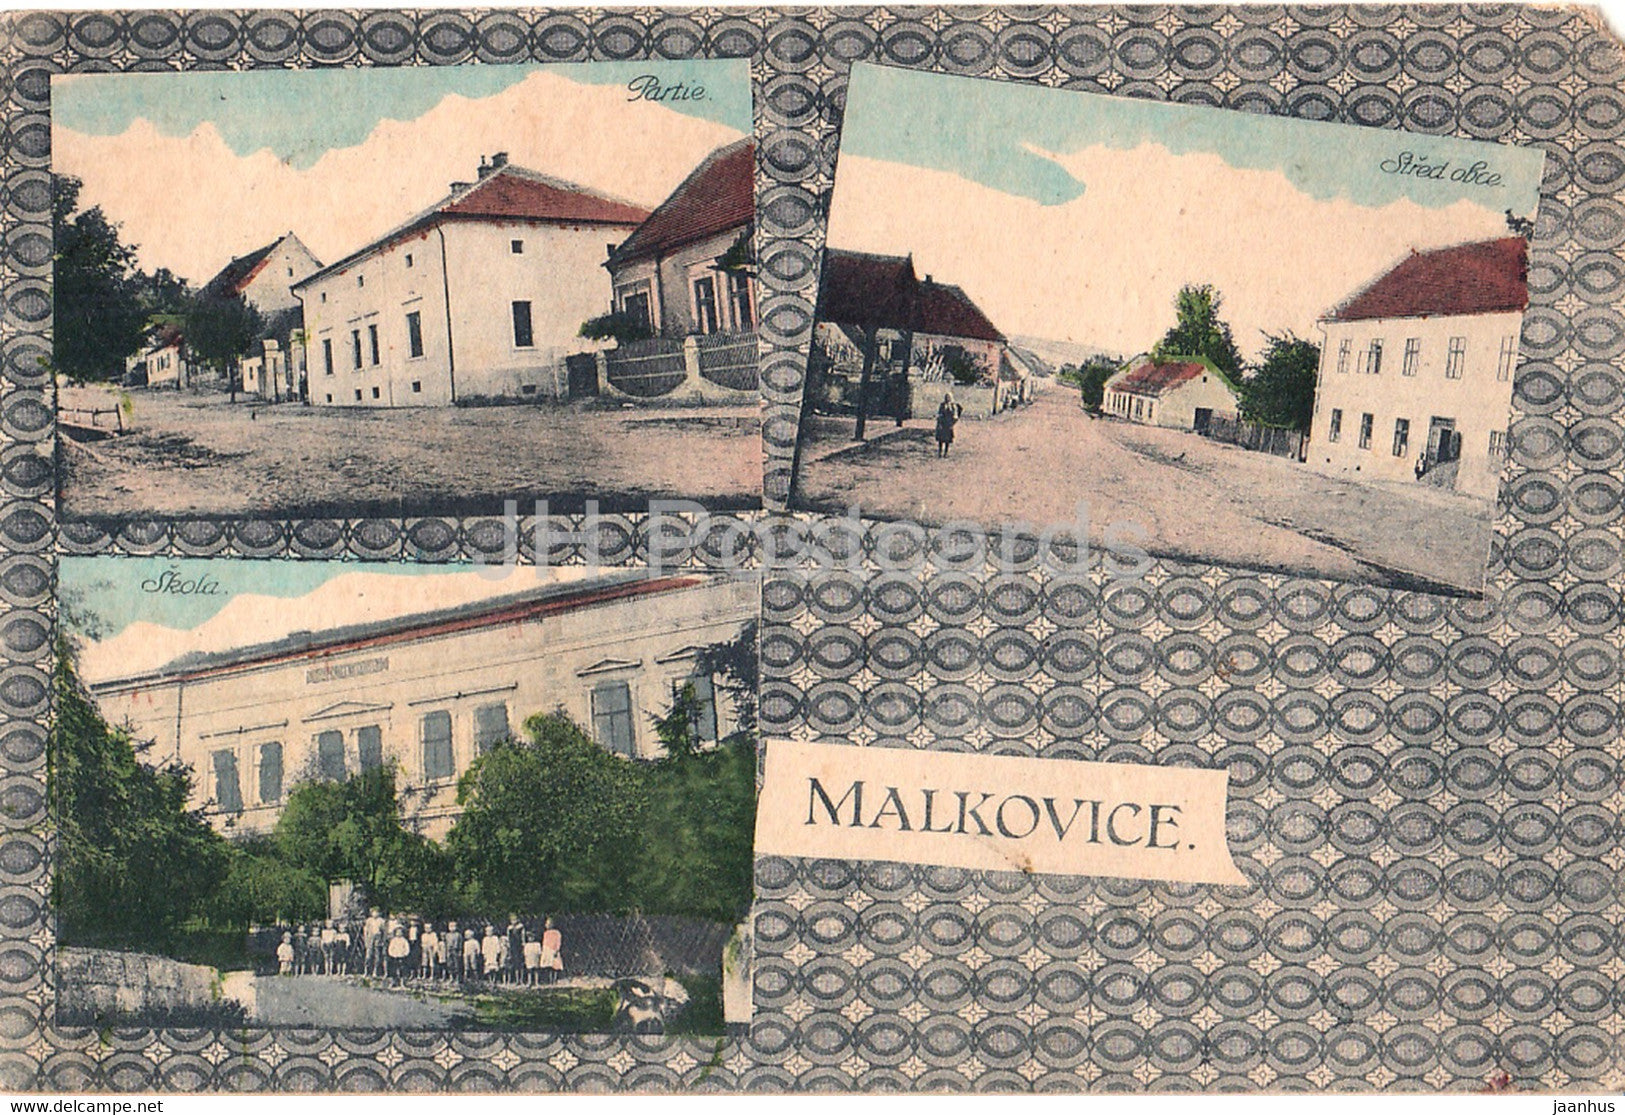 Malkovice - old postcard - 1921 - Czech Republic - Czechoslovakia - used - JH Postcards